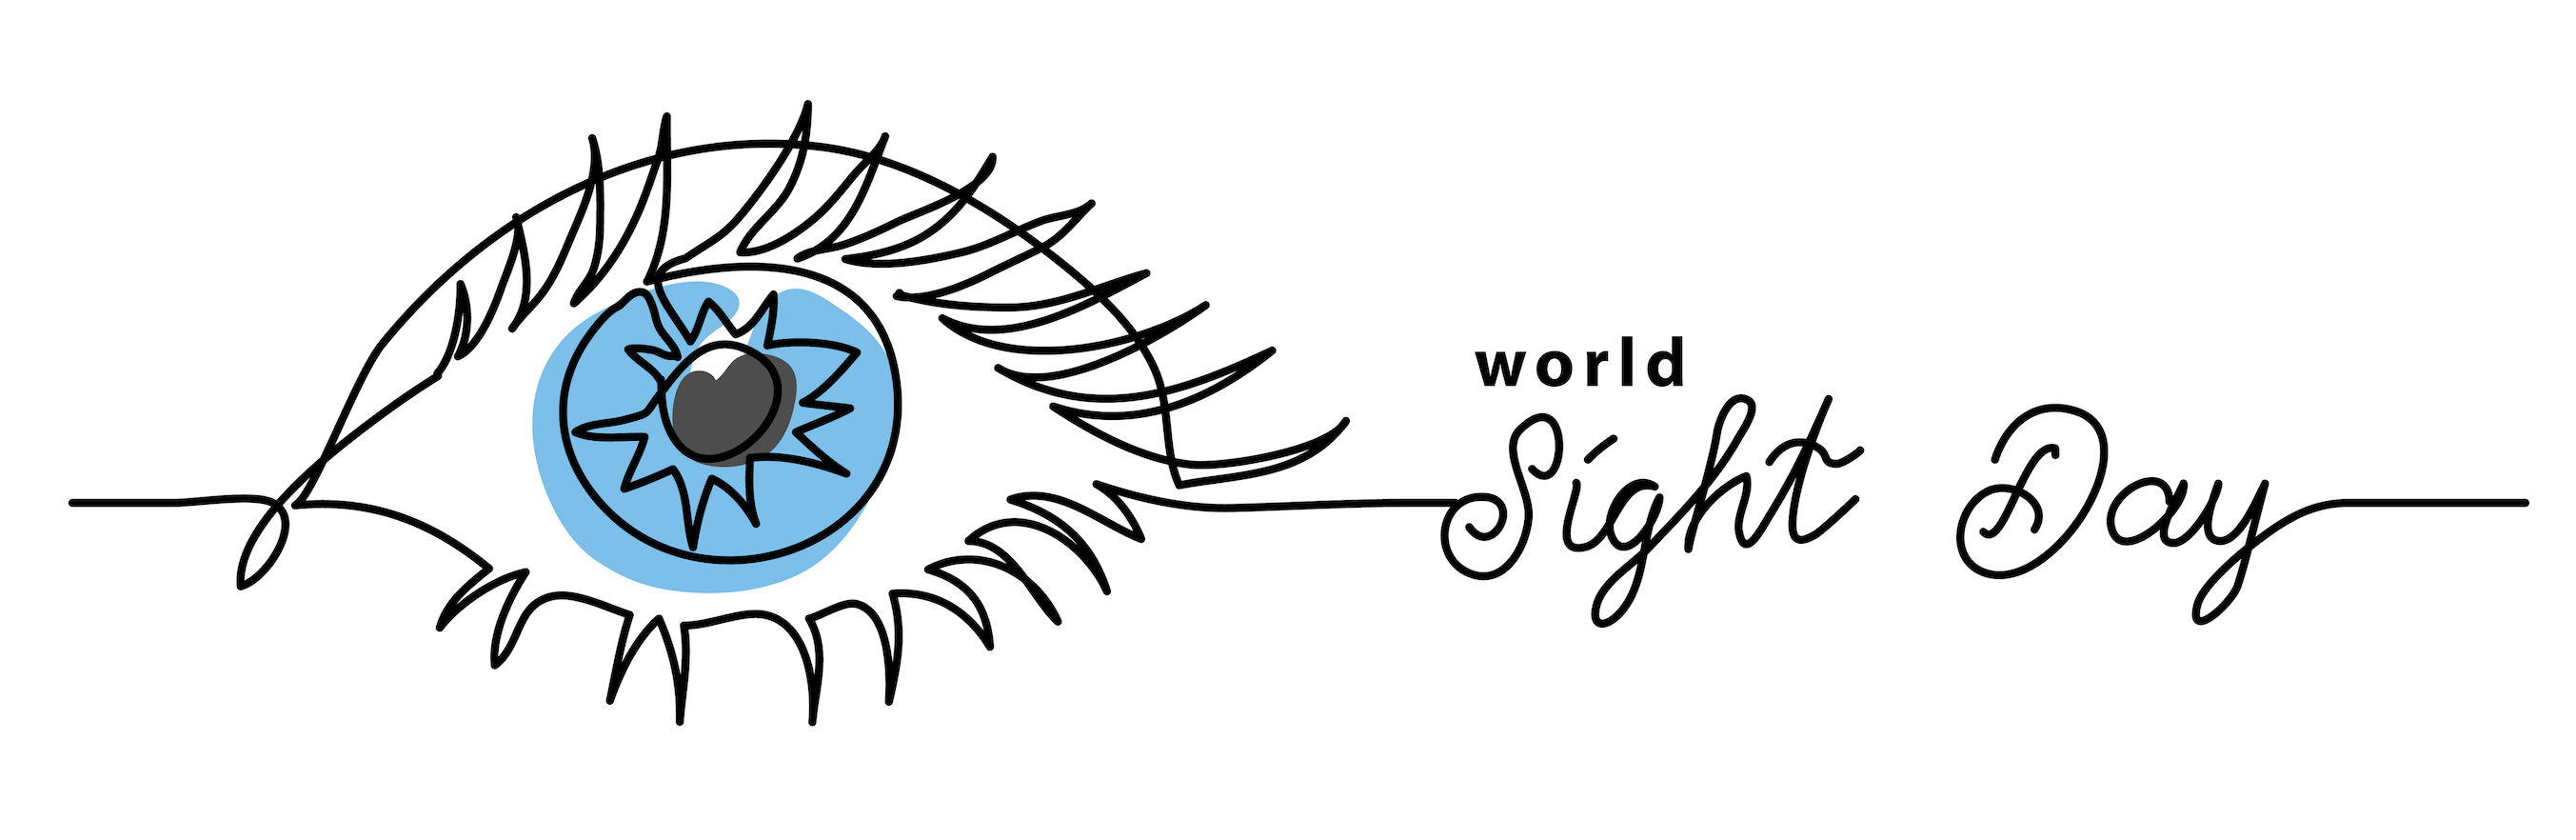 October 13: World Sight Day